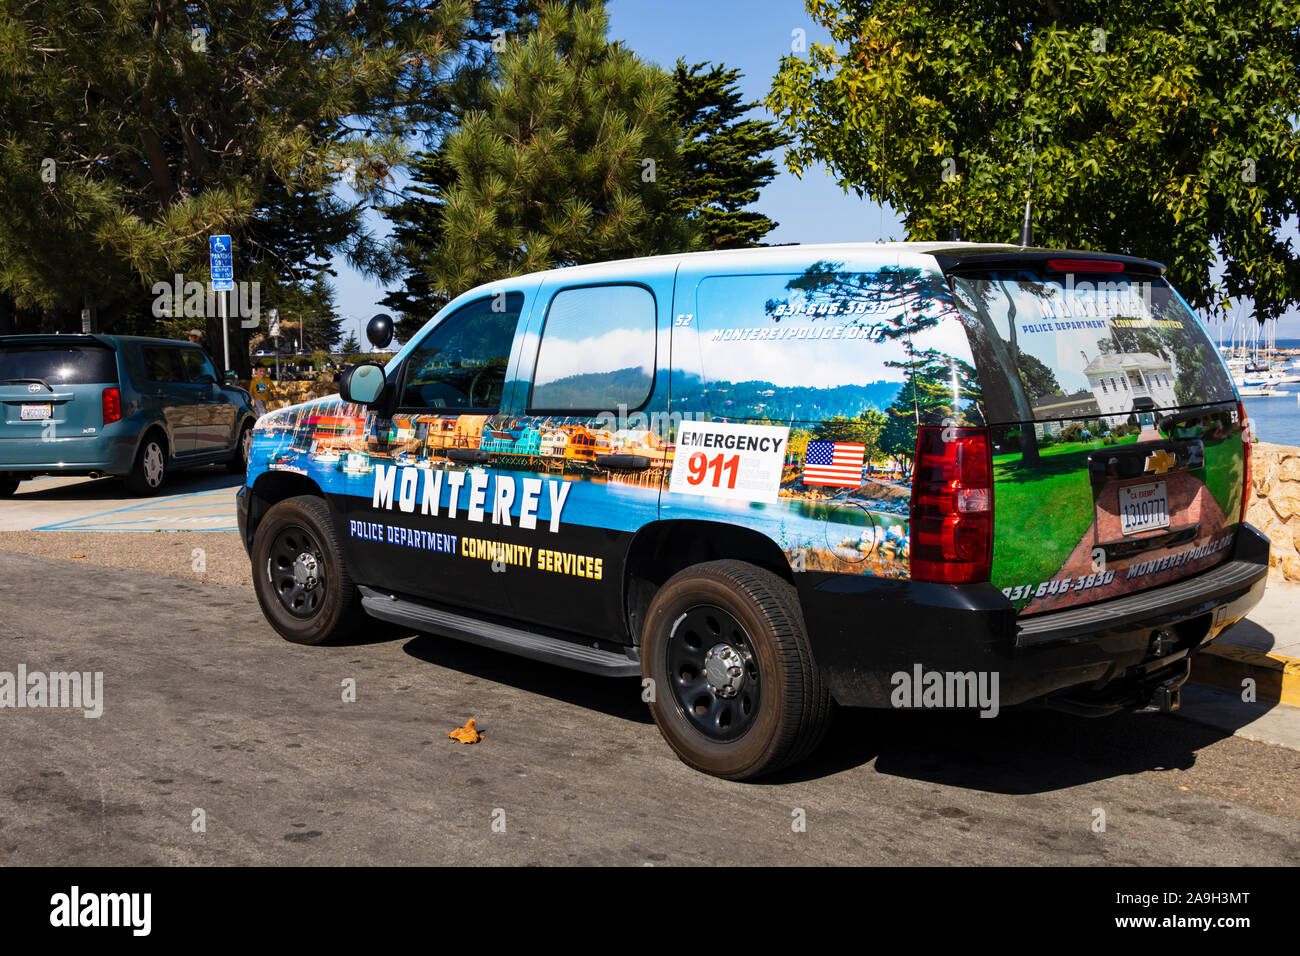 Monterey Police Department, Community Service vehicle, Monterey, California, United States of America Stock Photo